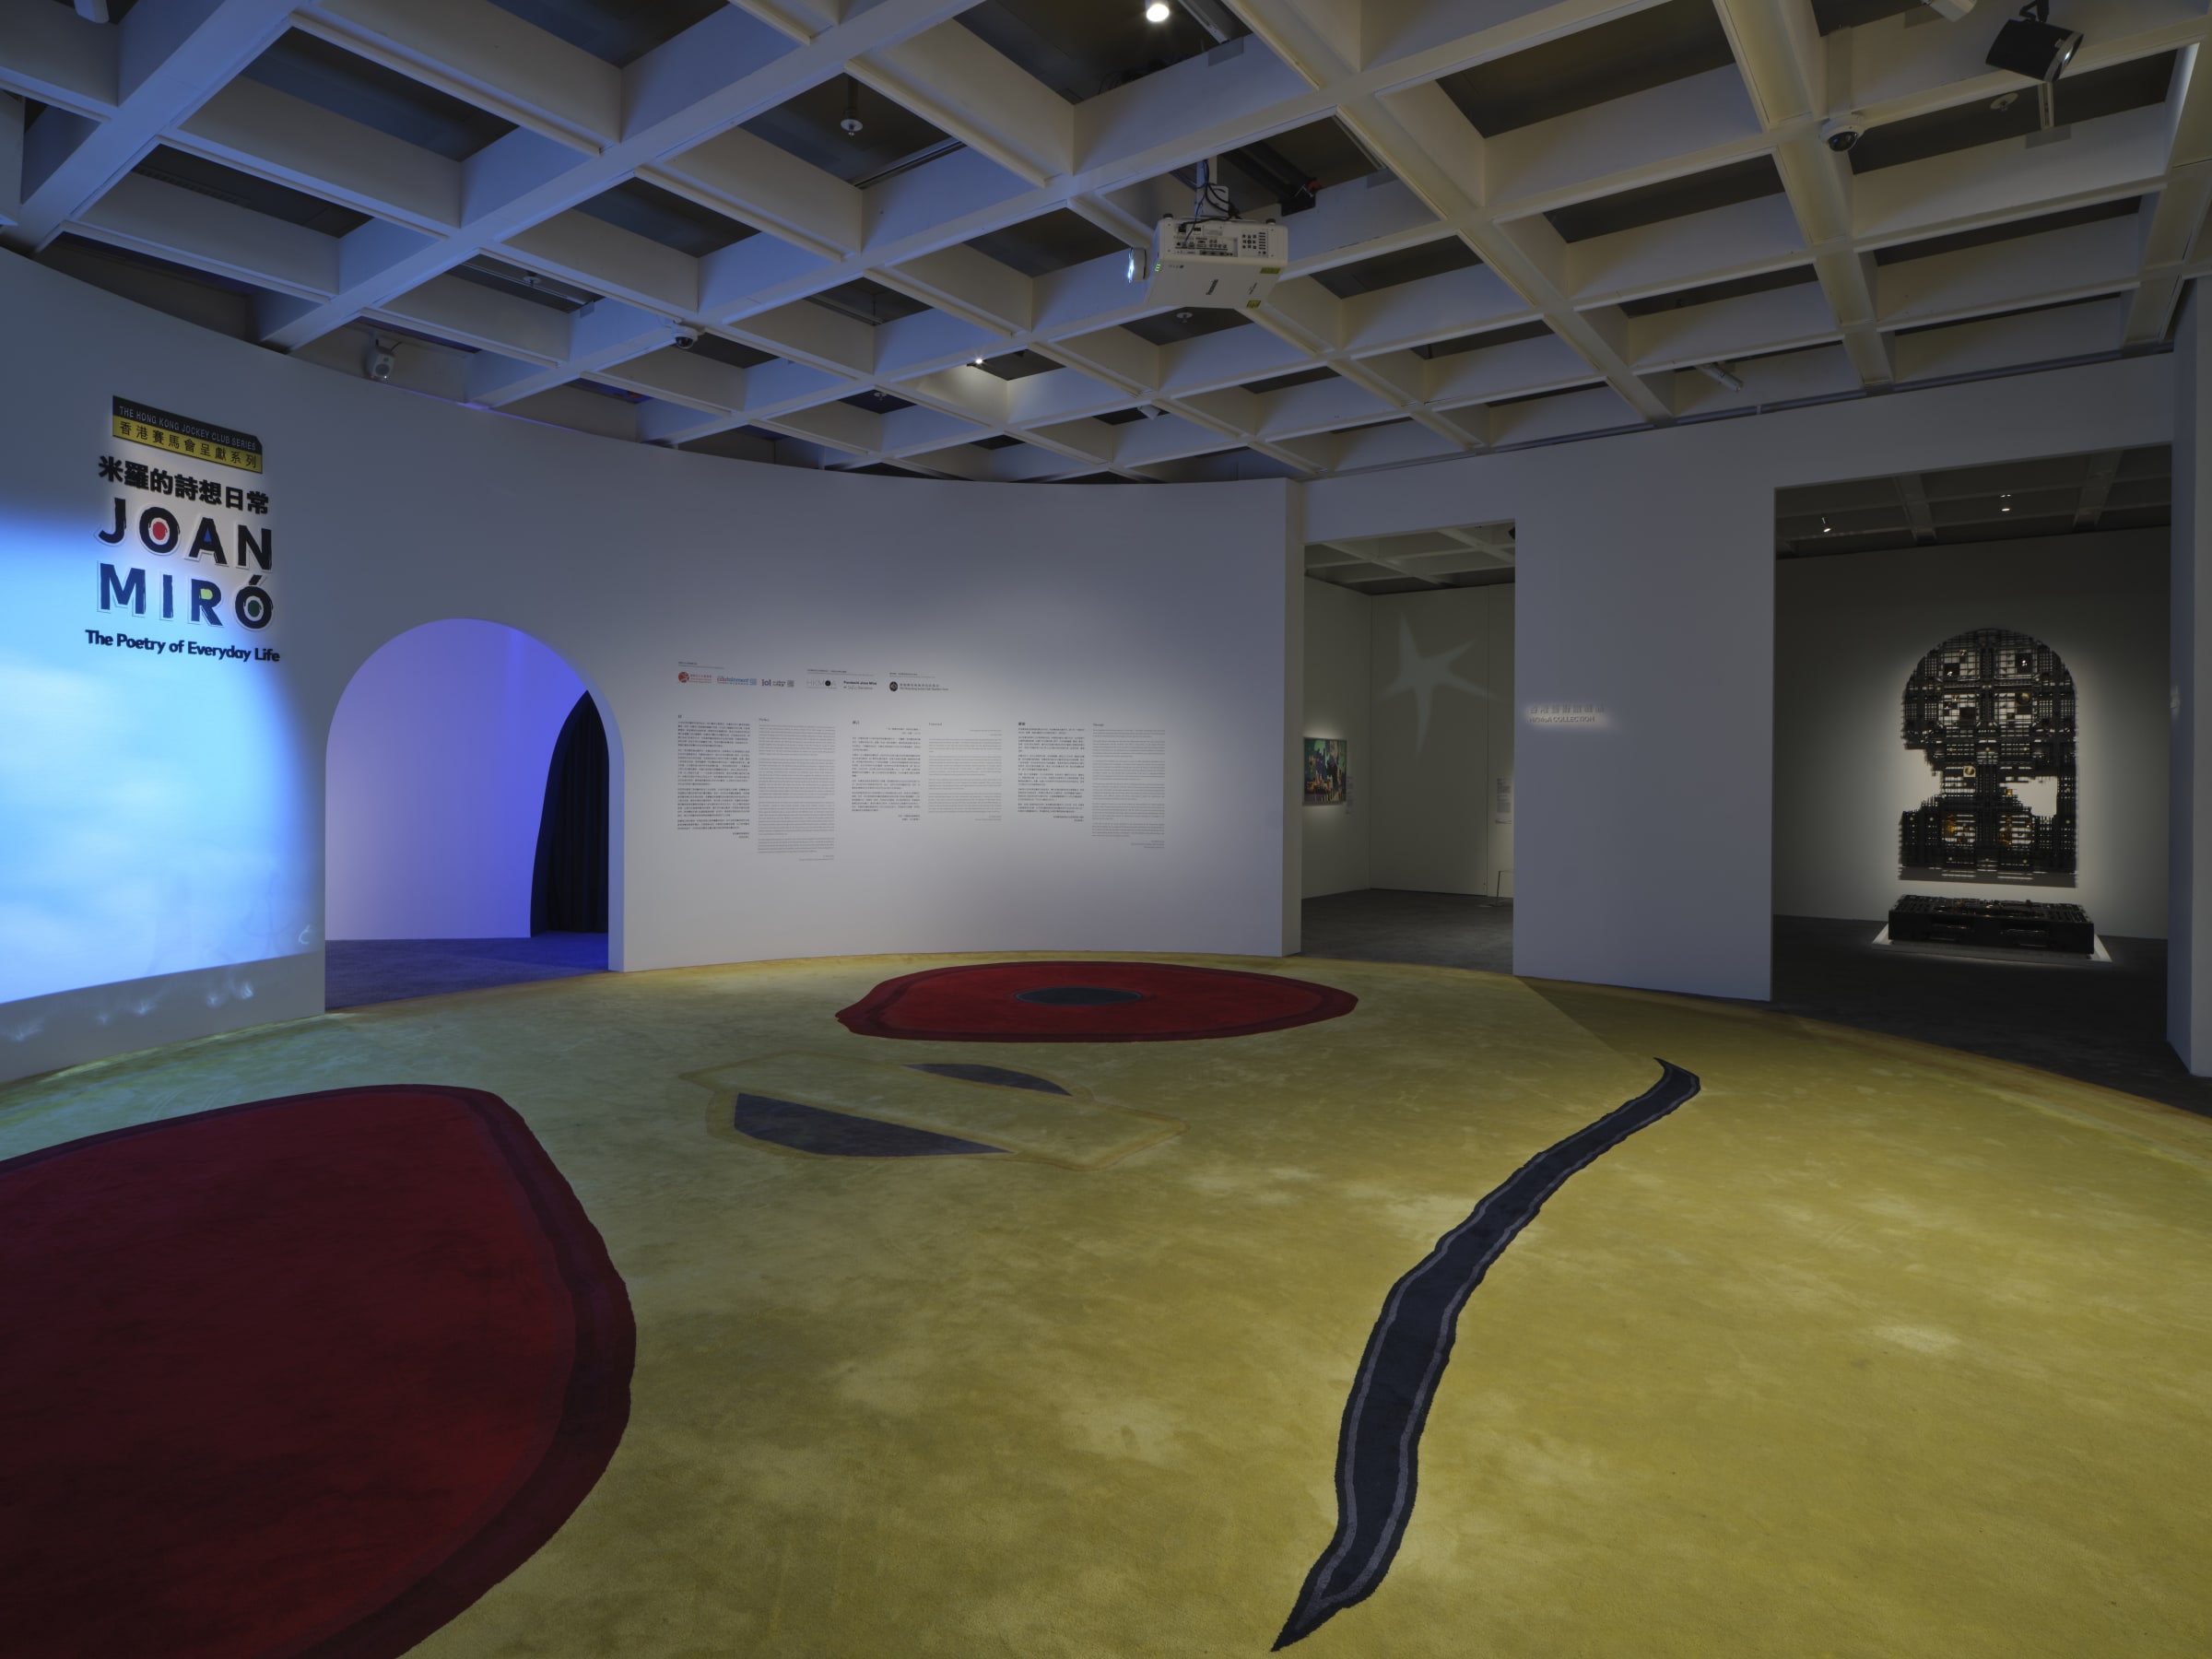 LEELEE CHAN, “JOAN MIRÓ – THE POETRY OF EVERYDAY LIFE” @ HONG KONG MUSEUM  OF ART